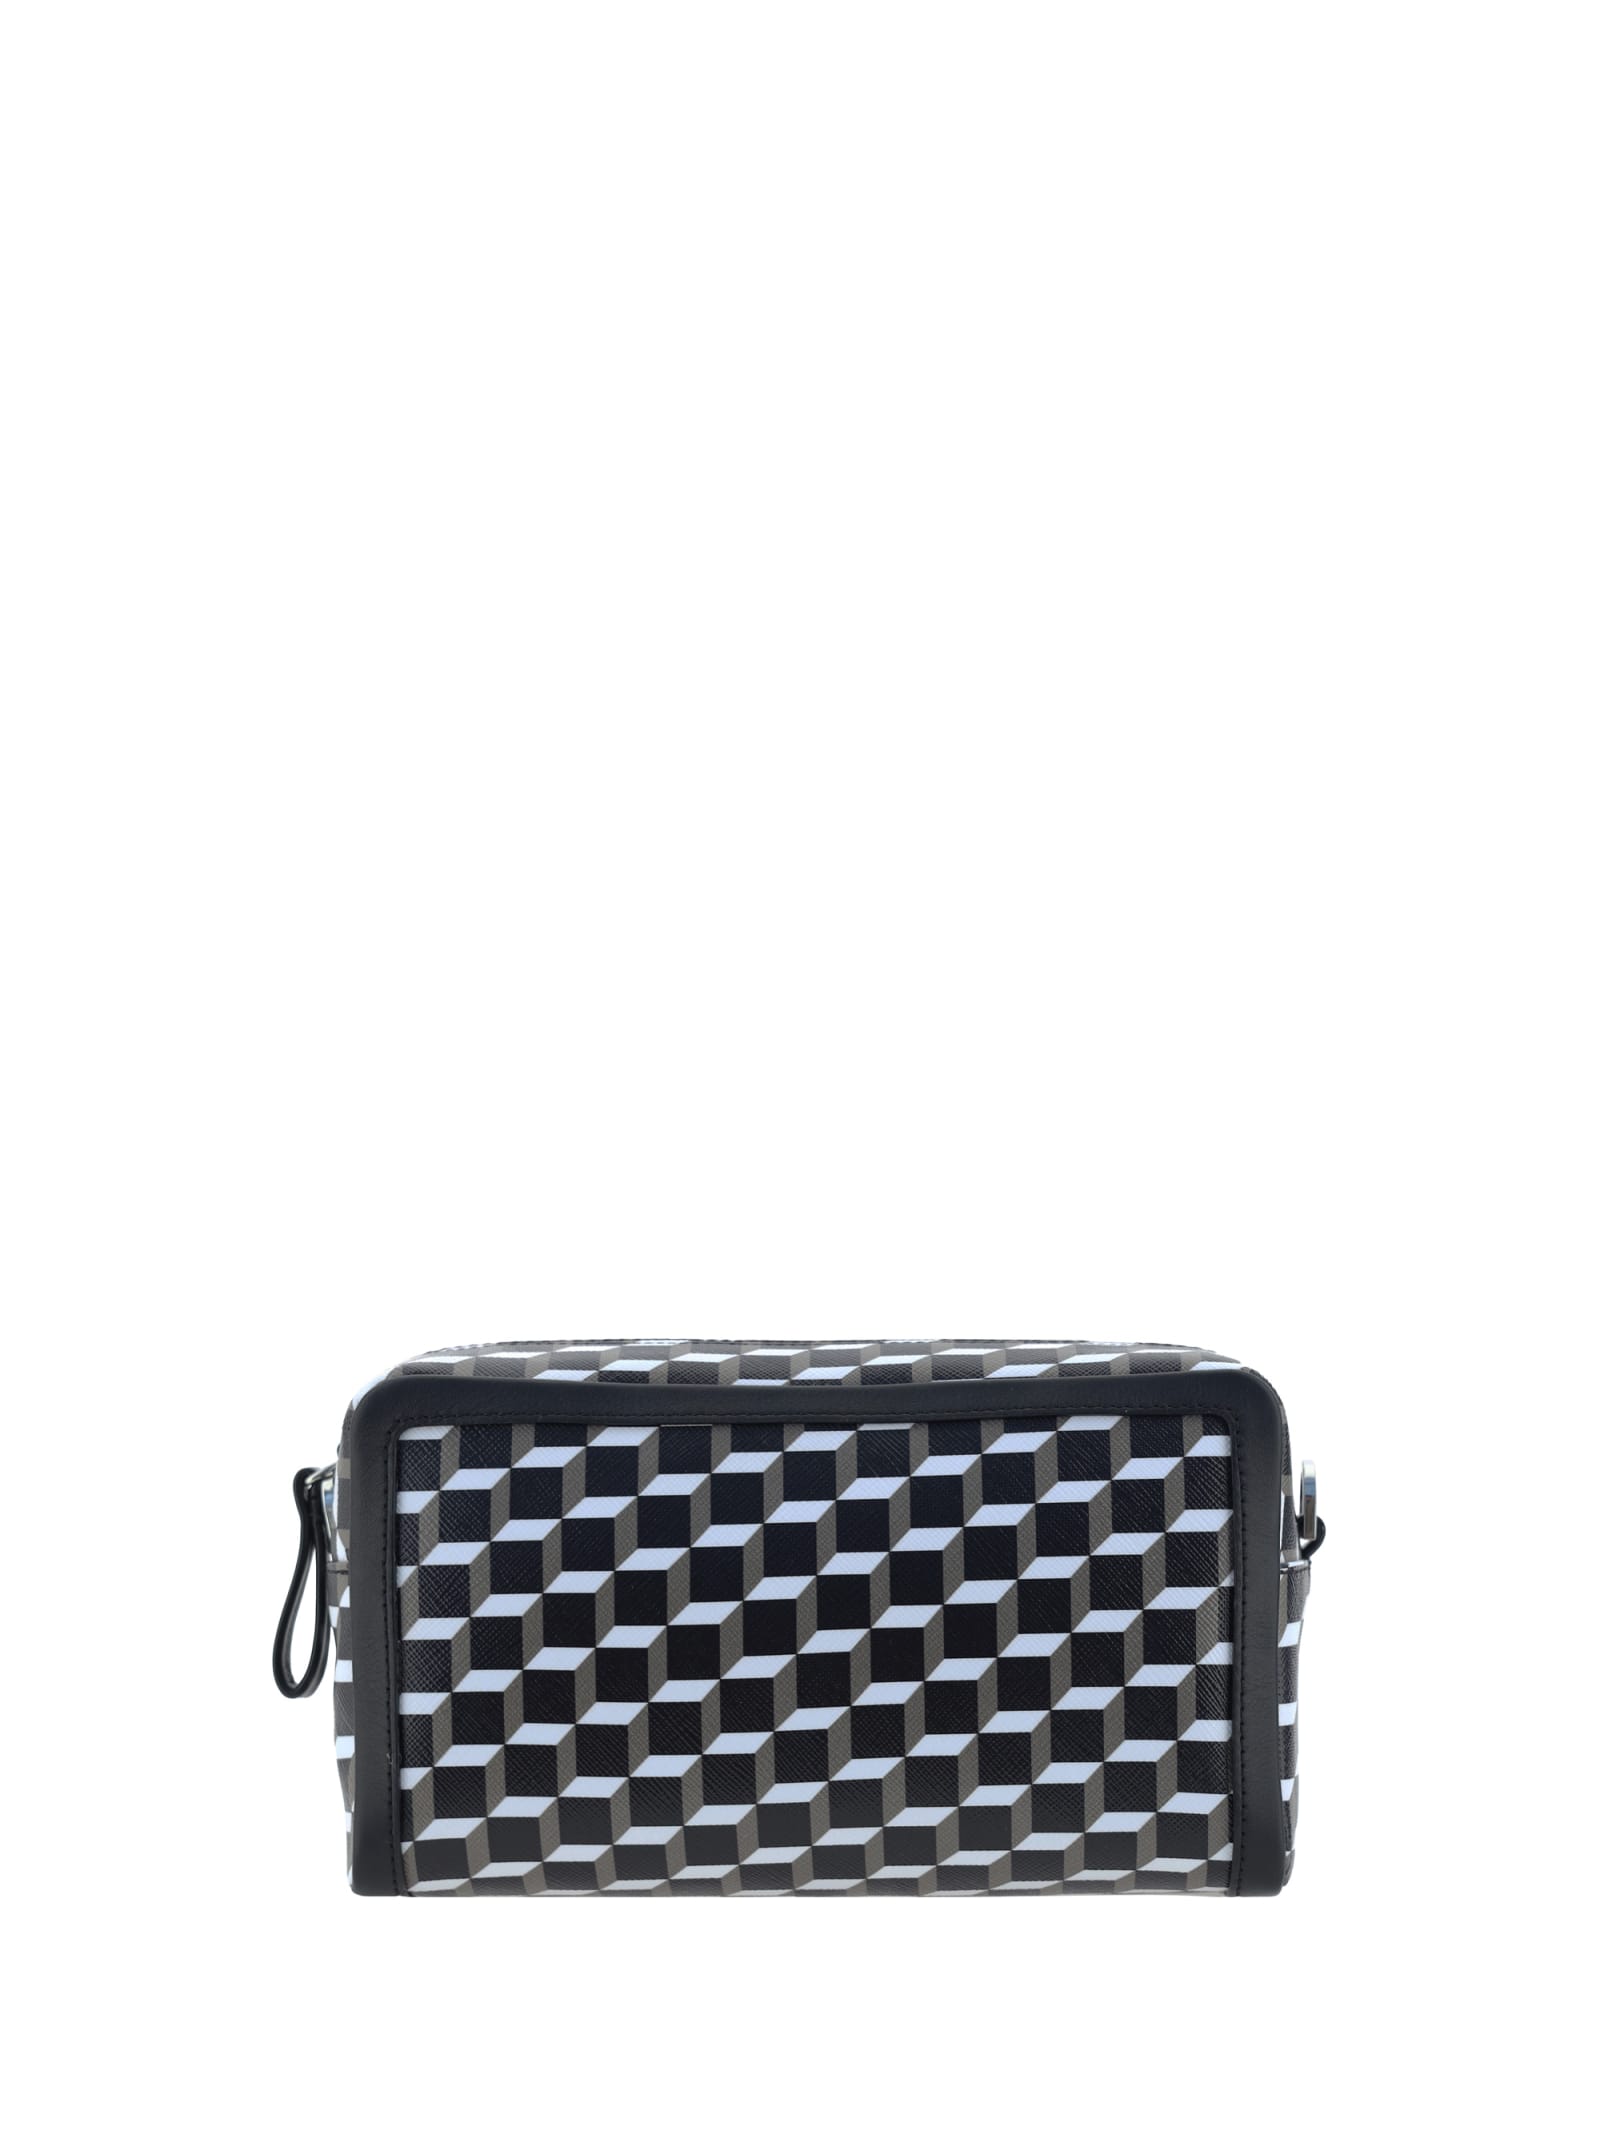 Pierre Hardy Cube Box Shoulder Bag In Black-white-black